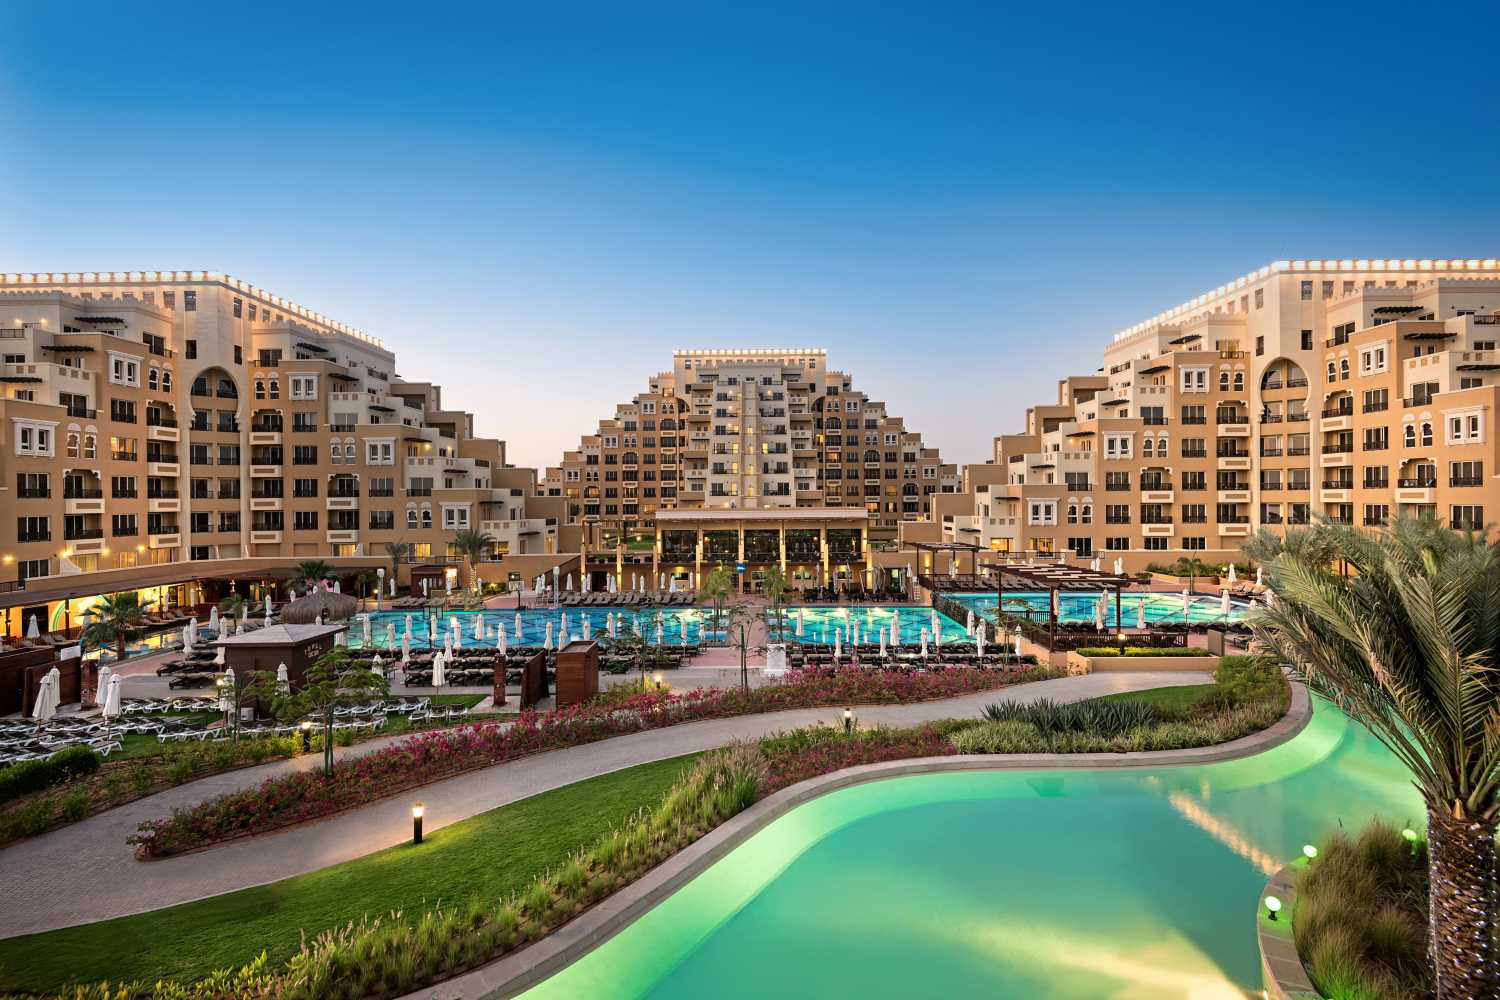 Rixos Bab Al Bahr launches summer staycation deals | Hotels, Summer